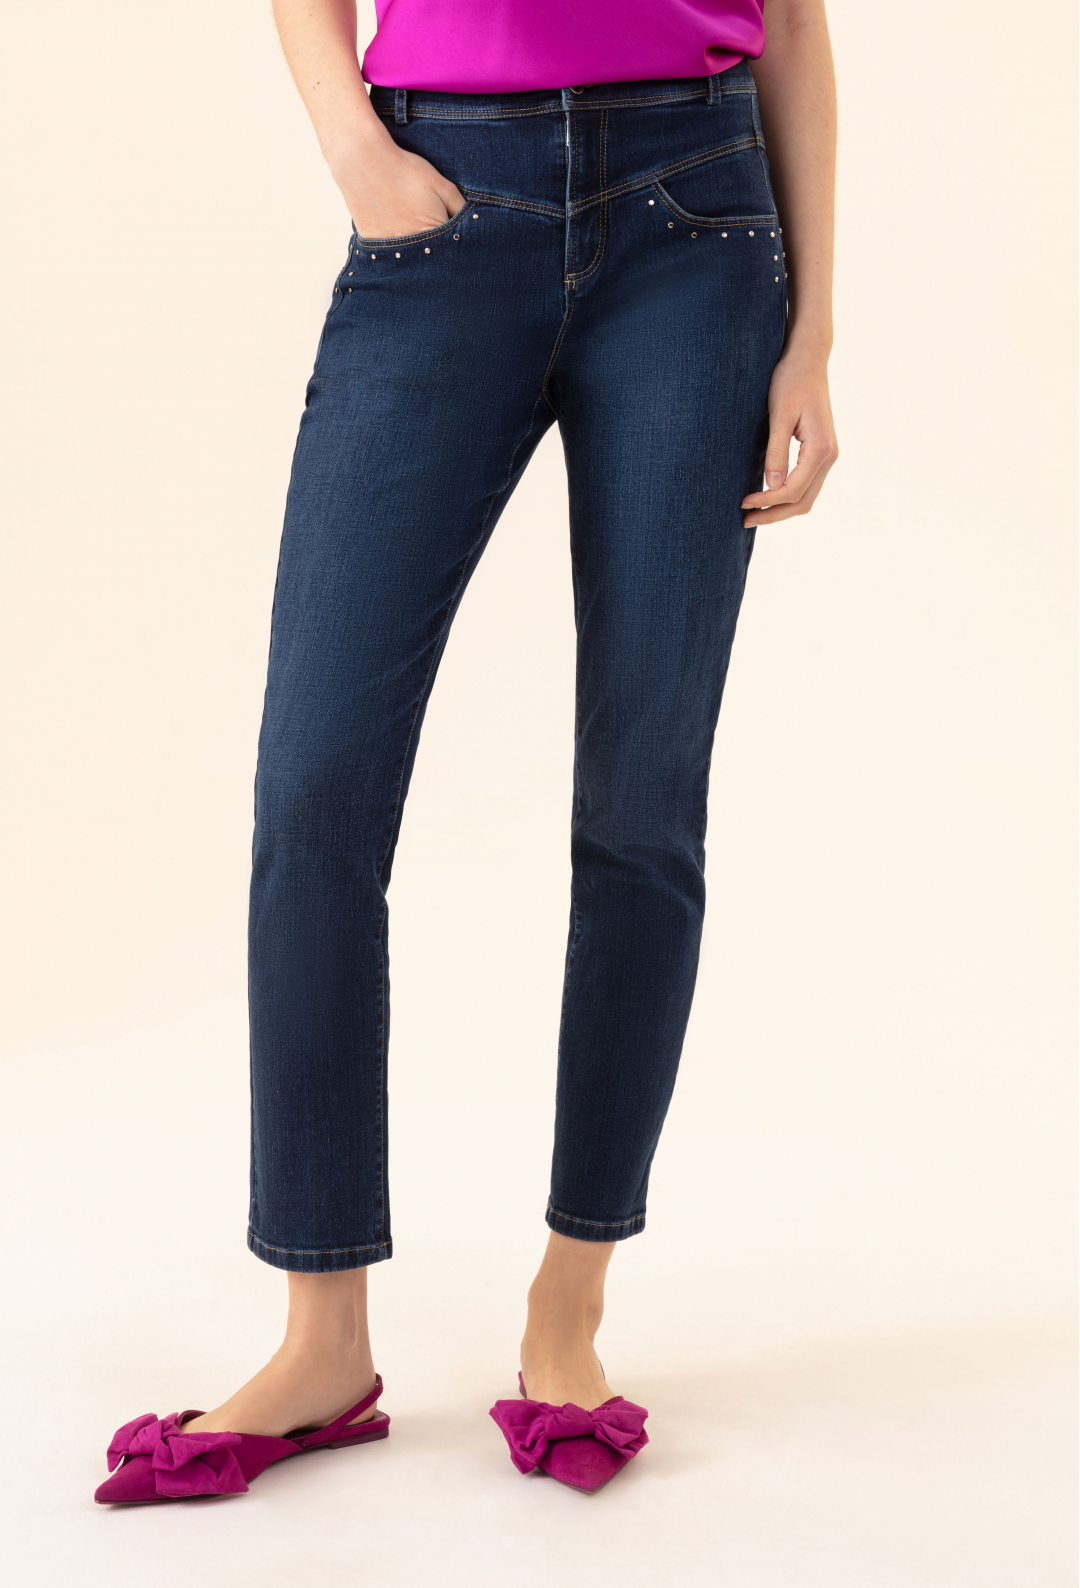 Trefle cotton blue denim jeans